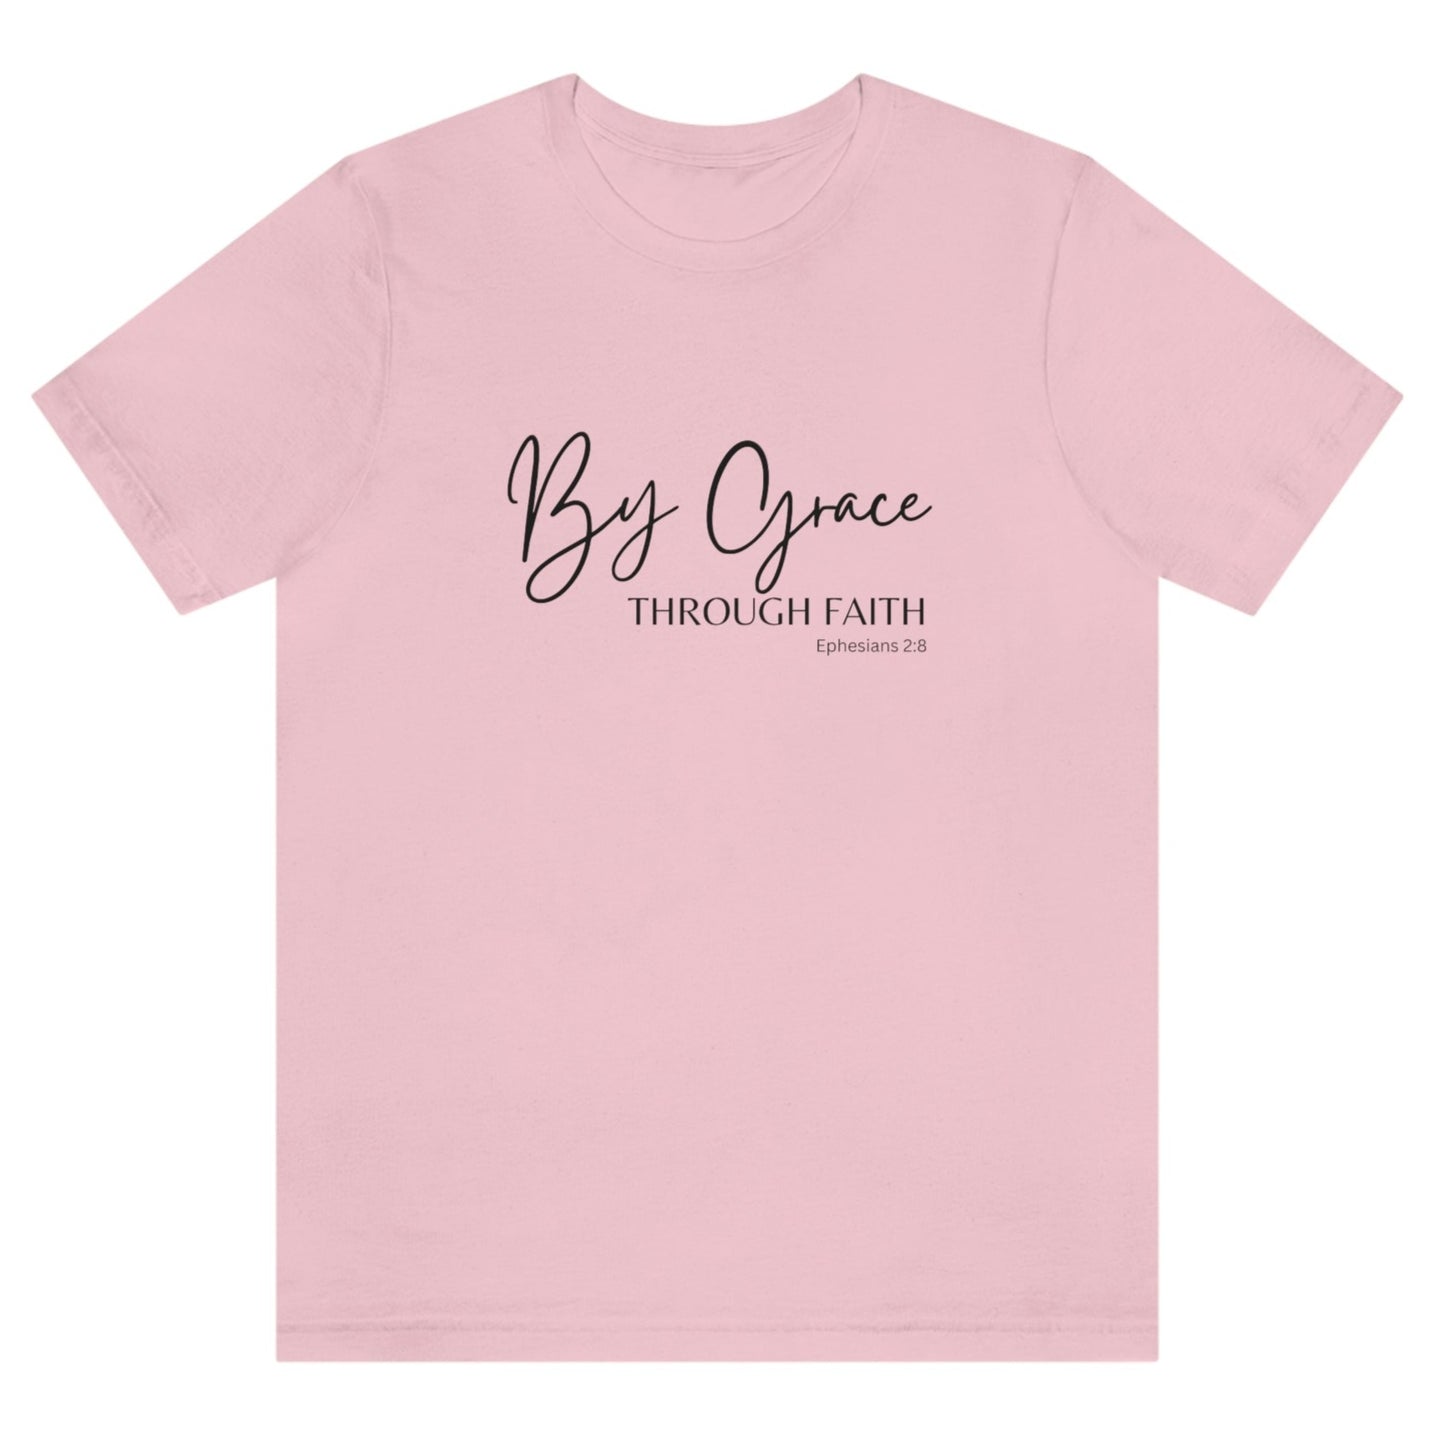 by-grace-through-faith-ephesians-2-8-pink-t-shirt-womens-faith-inspiring